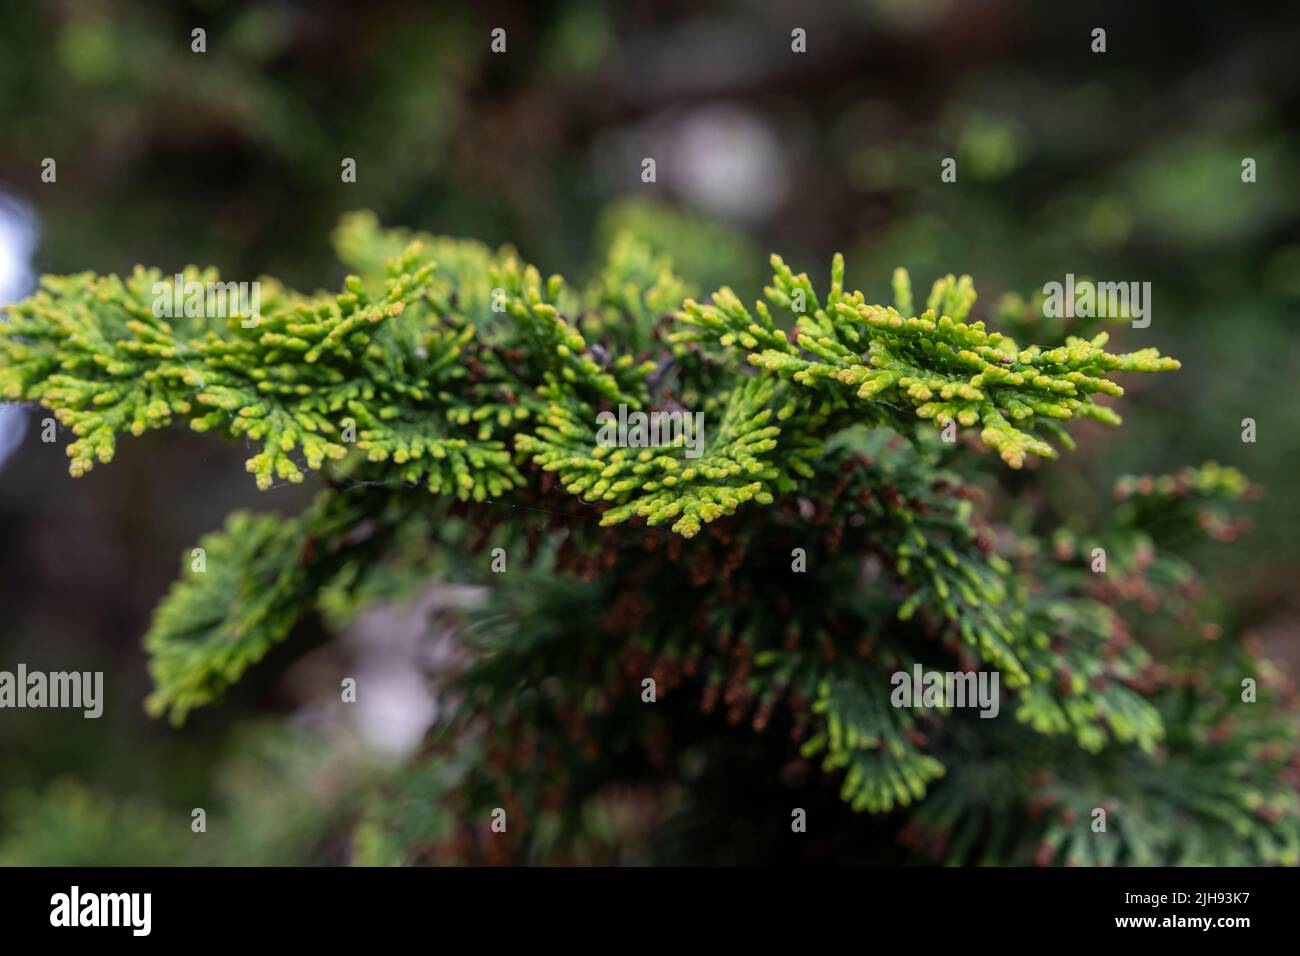 Hinoki japanese cypress (Chamaecyparis obtusa) evergreen scale-like leaves Stock Photo